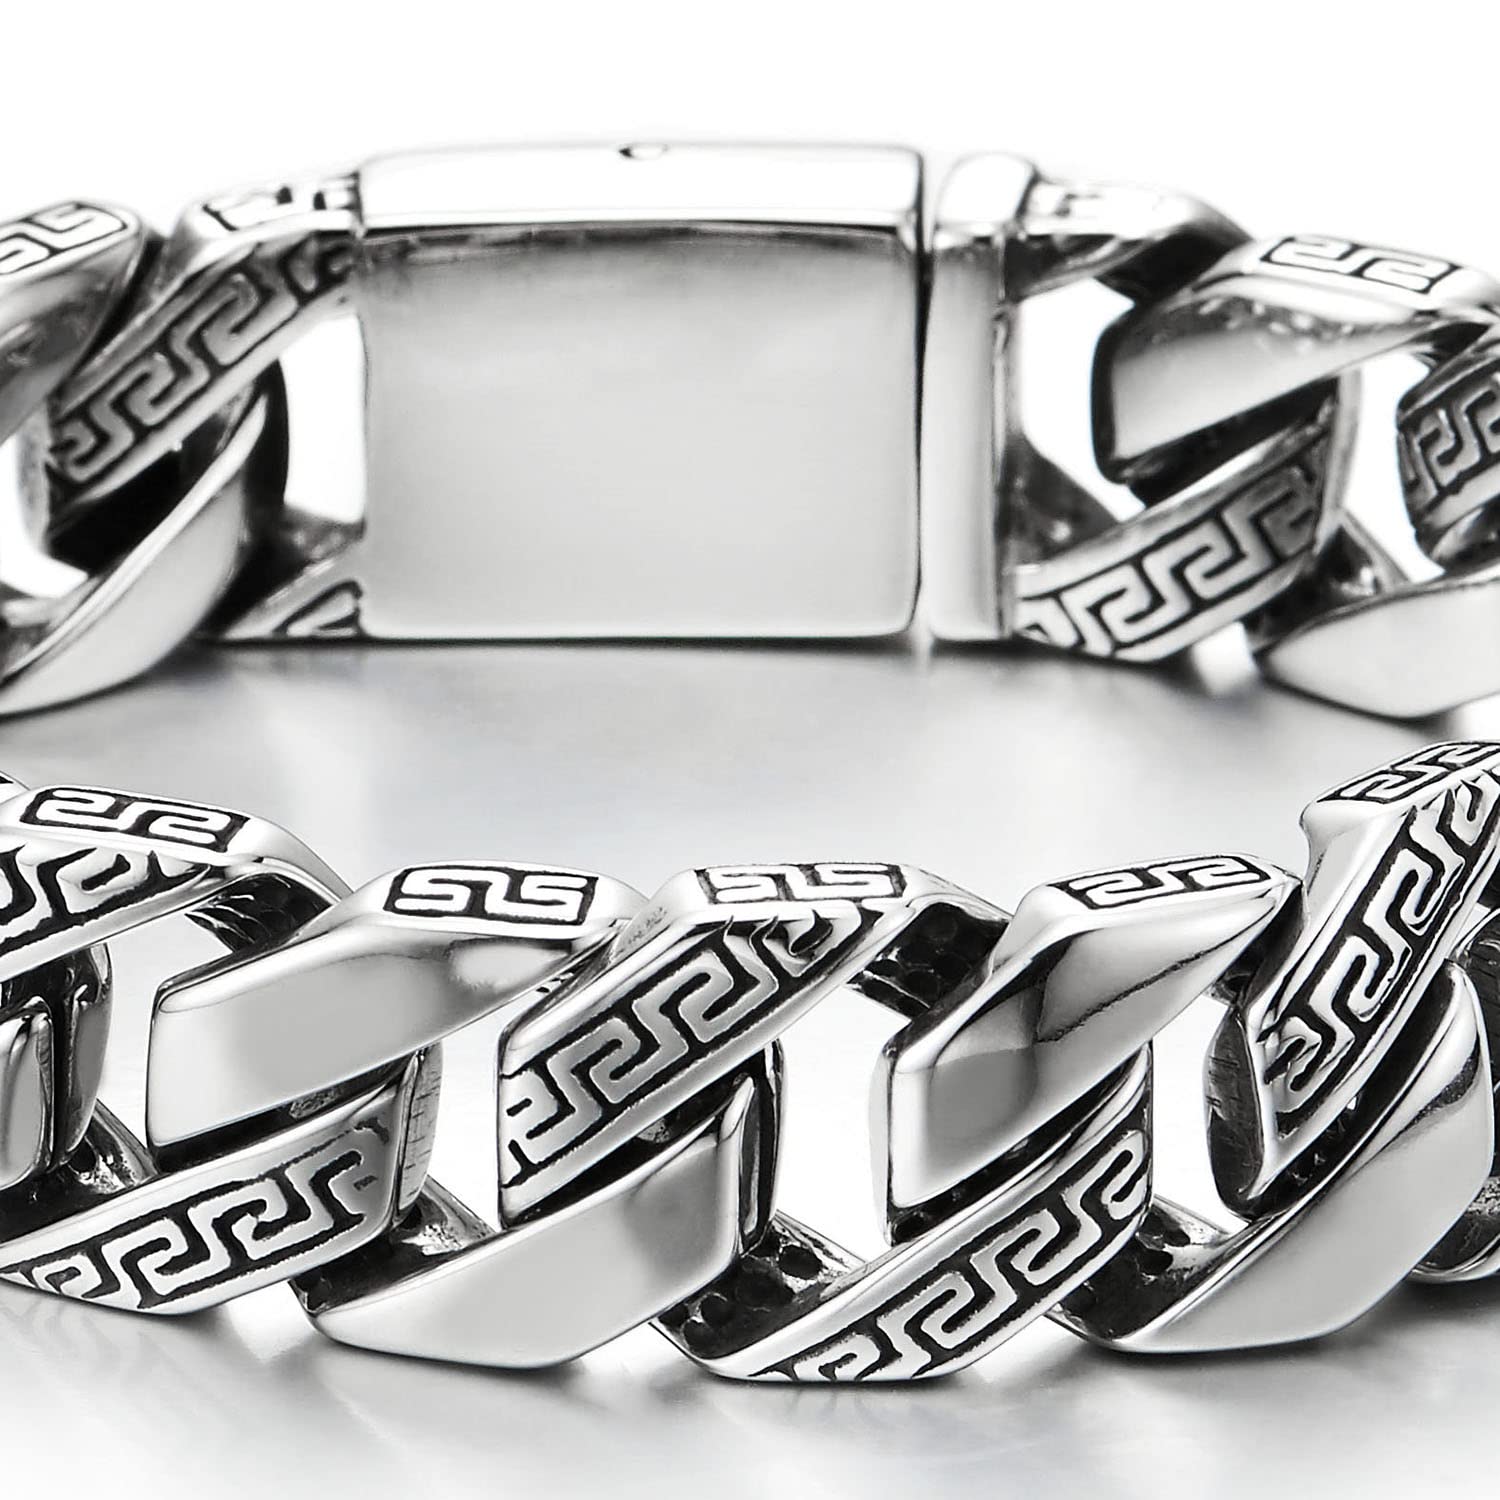 Cluster Of Circle Boys Silver Chain Design Bracelet For Men's / Boy's –